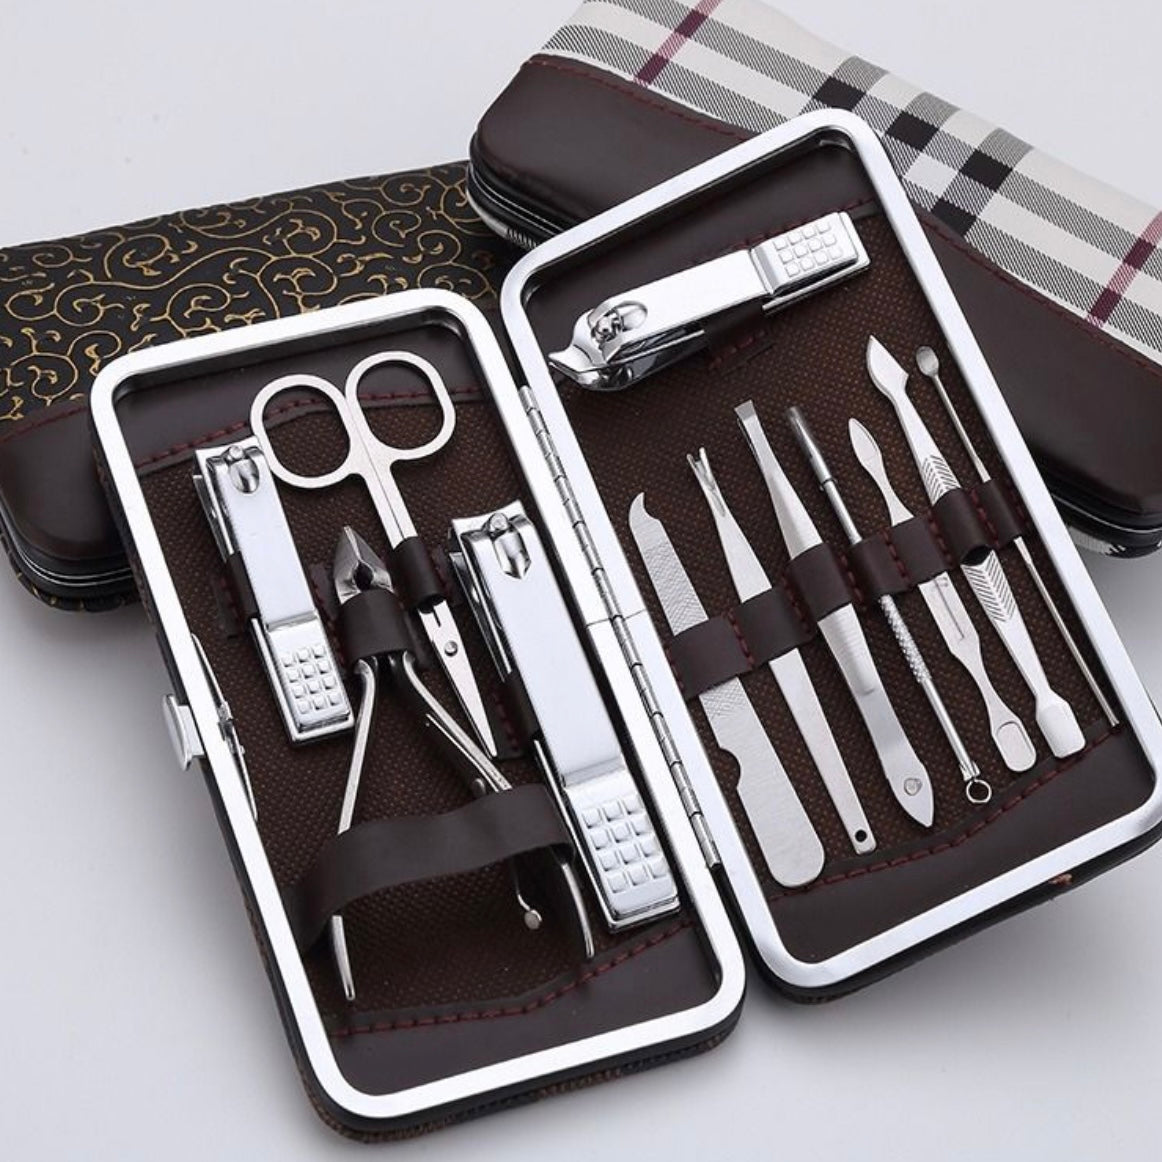 12 Pcs Multifunctional Pocket Set Manicure Pedicure Nail Clippers Scissors